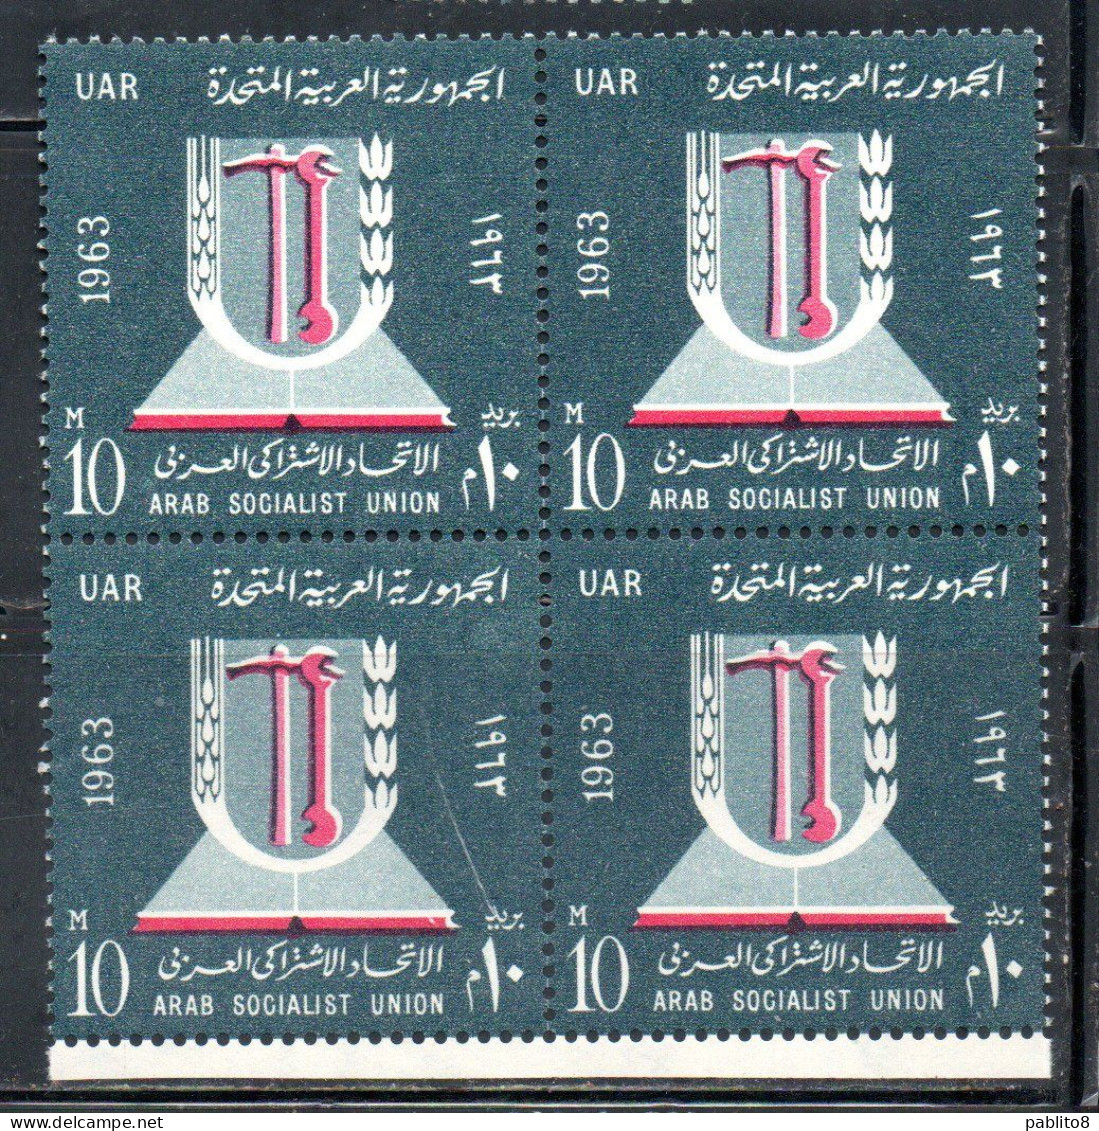 UAR EGYPT EGITTO 1963 11th ANNIVERSARY REVOLUTION ARAB SOCIALIST UNION EMBLEM 10m MNH - Unused Stamps